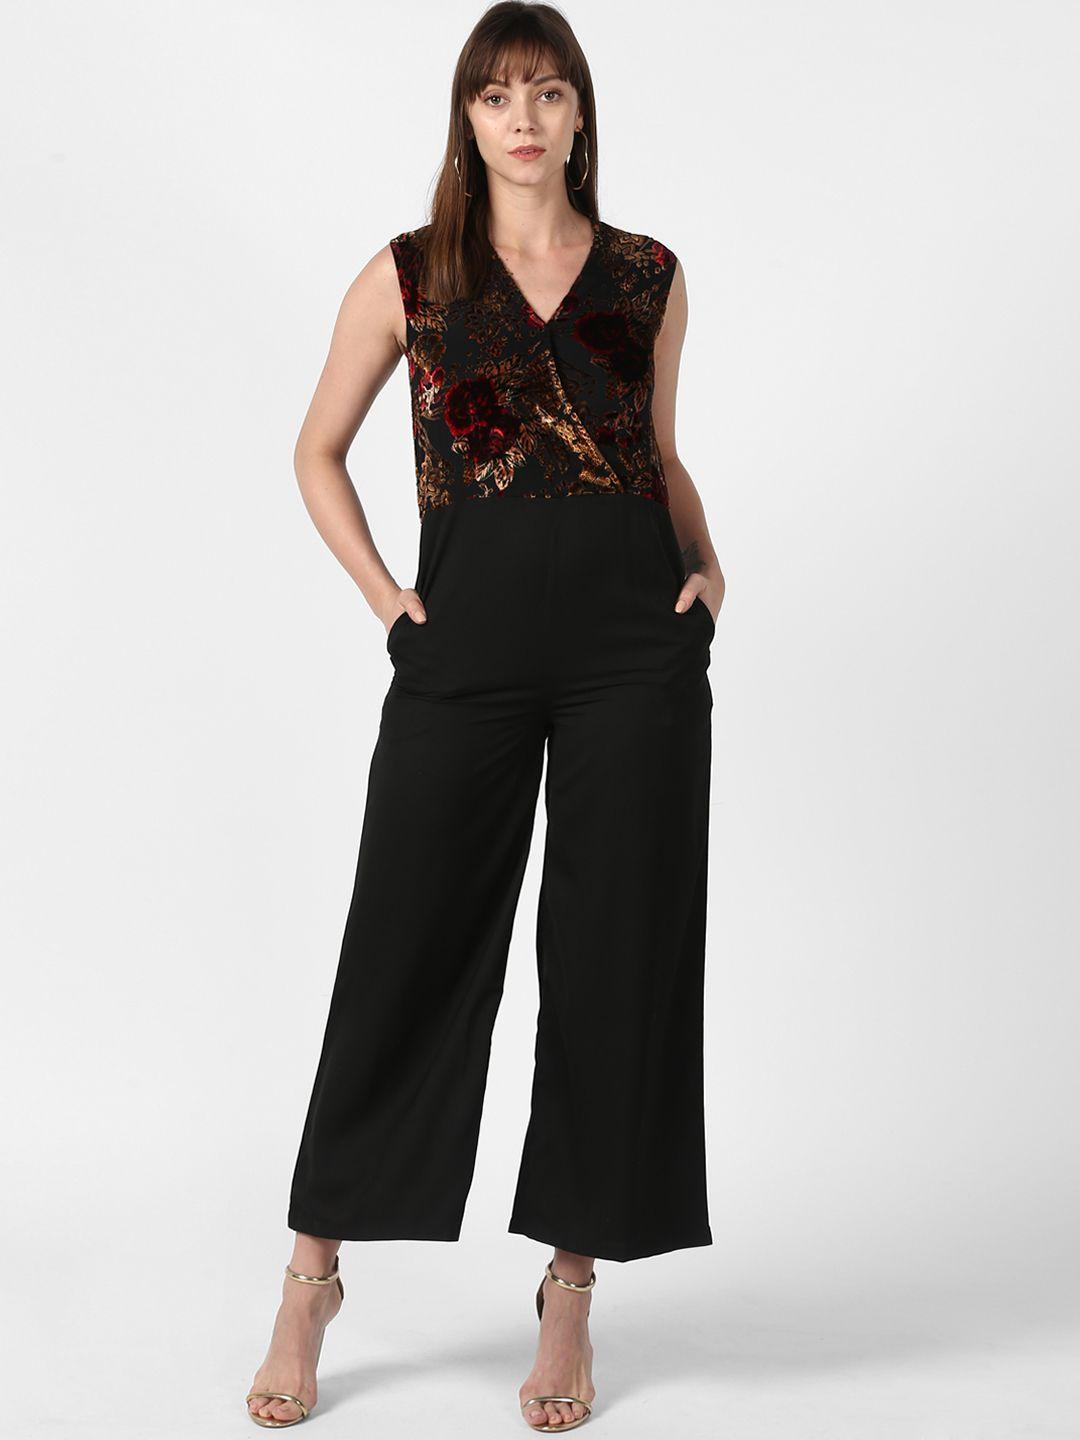 stylestone women black & red printed basic jumpsuit